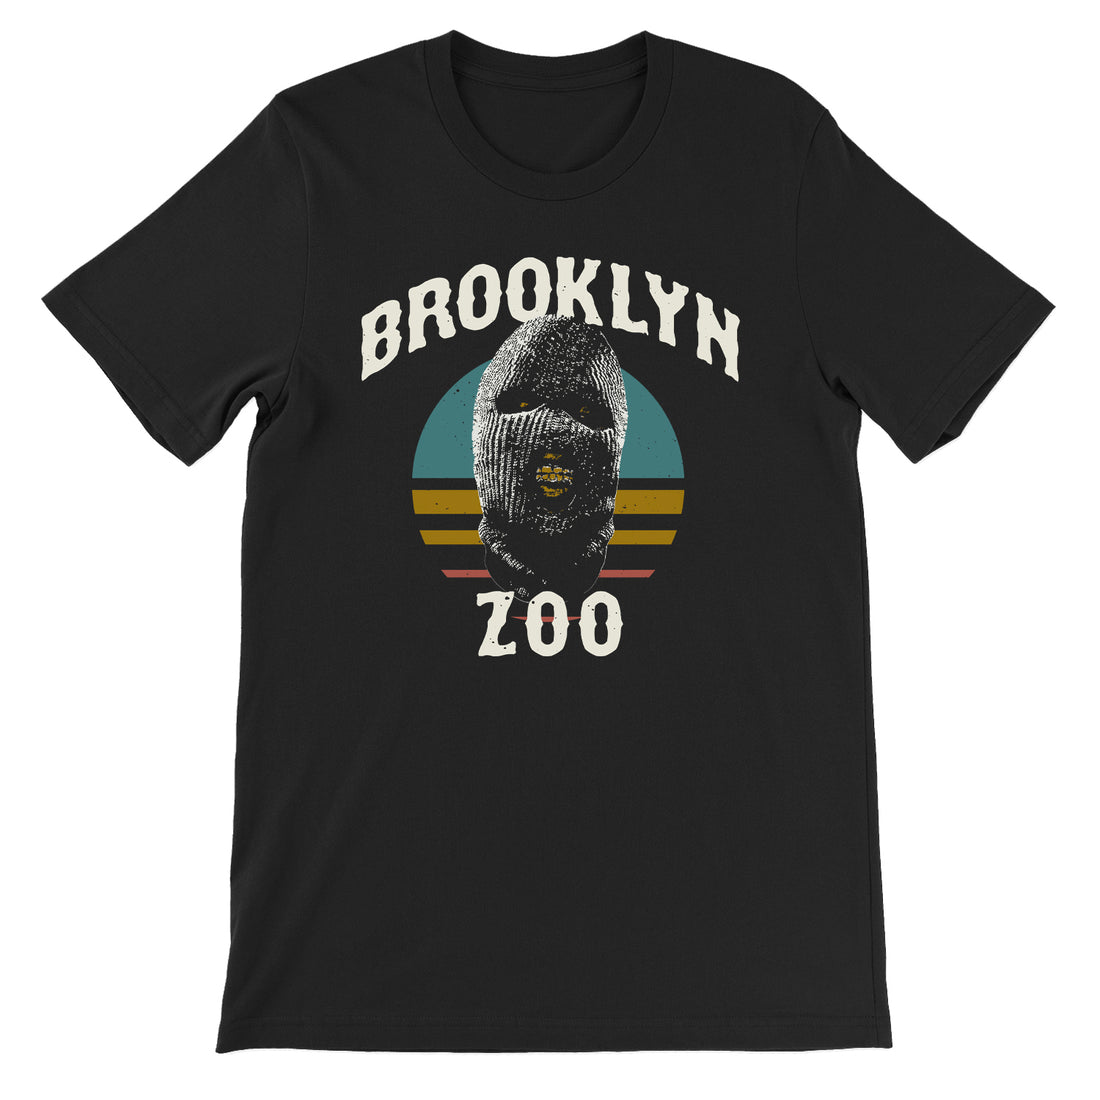 Brooklyn Zoo T-Shirt